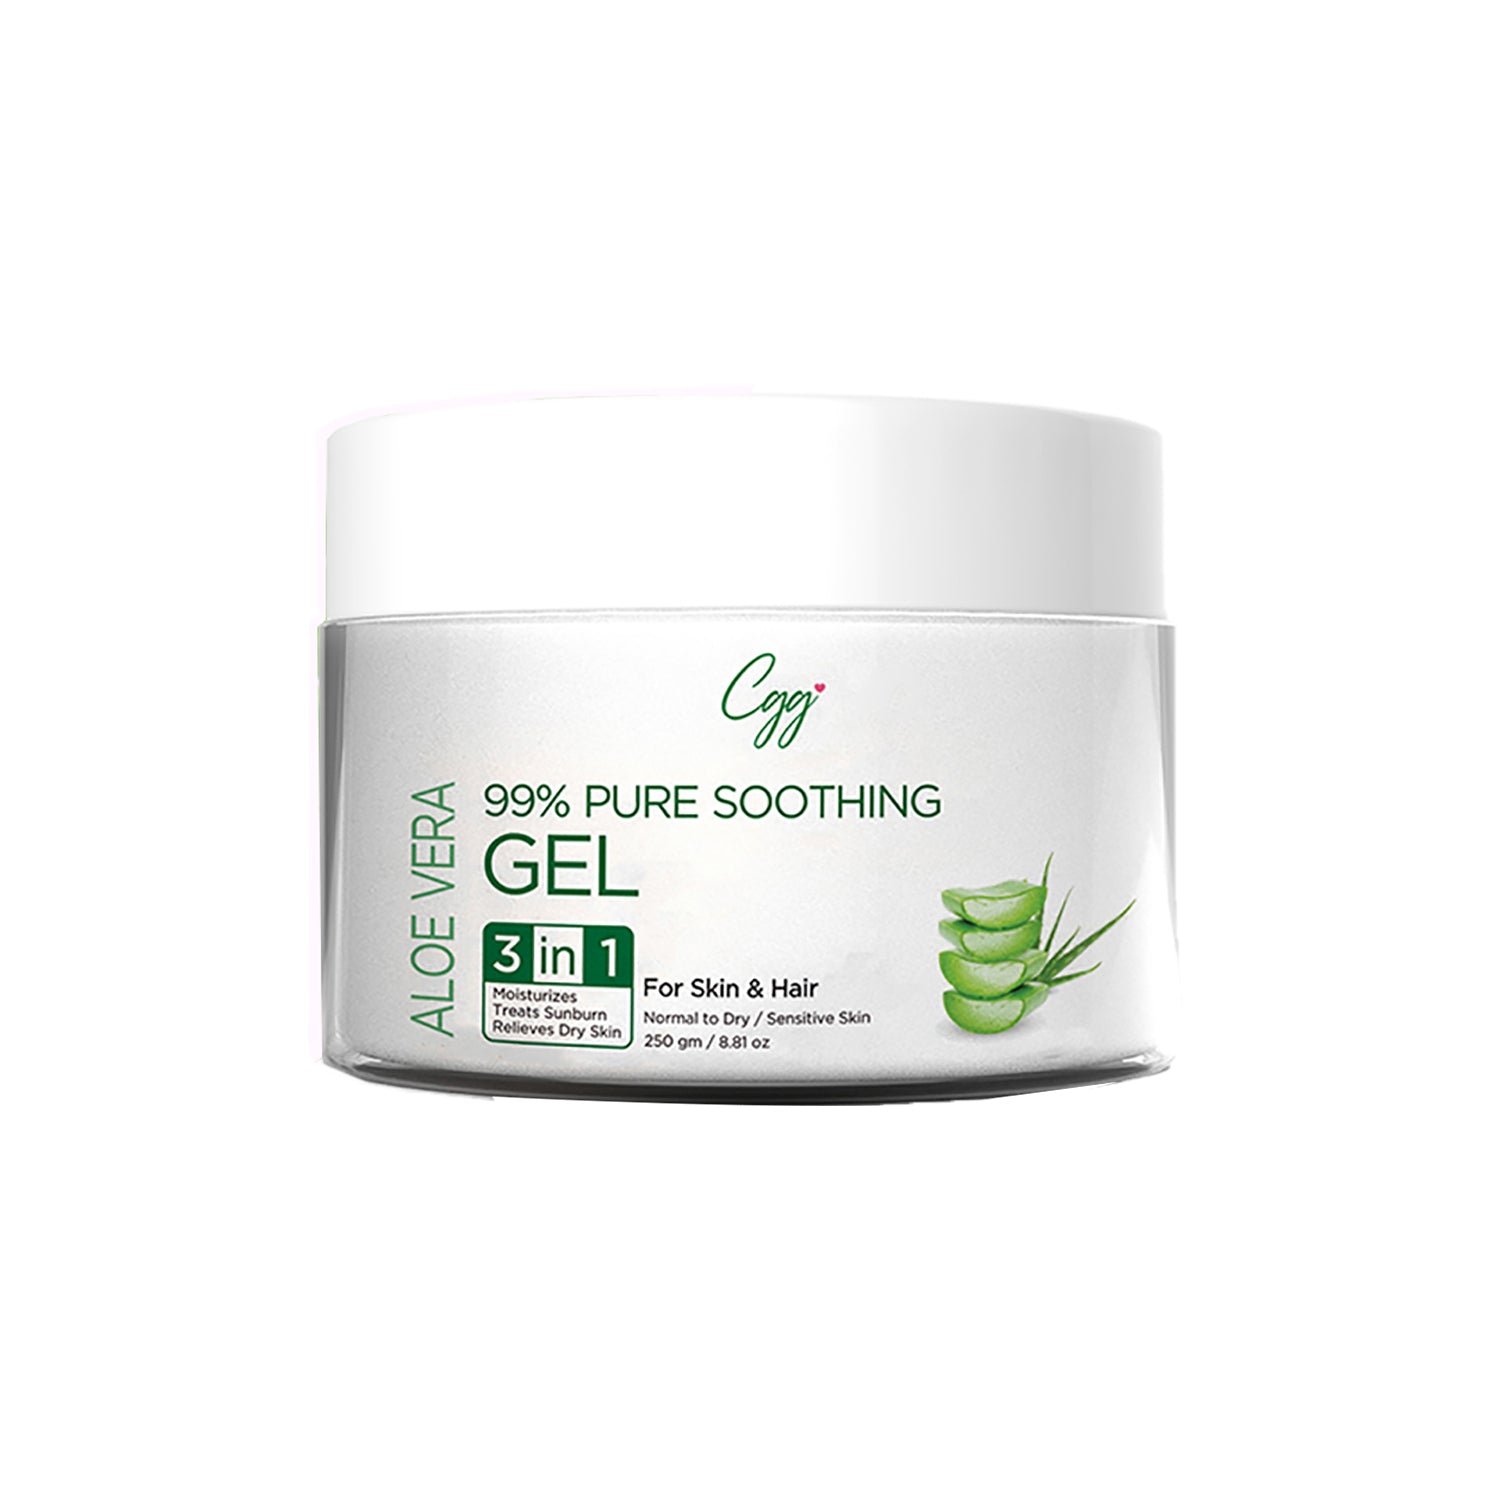 CGG Cosmetics Aloe Vera 99% Pure Soothing Gel - For Skin & Hair | 3-In-1 Moisturizes Hair, Treats Sunburn, Relives Dry Skin Vegan - 250gm